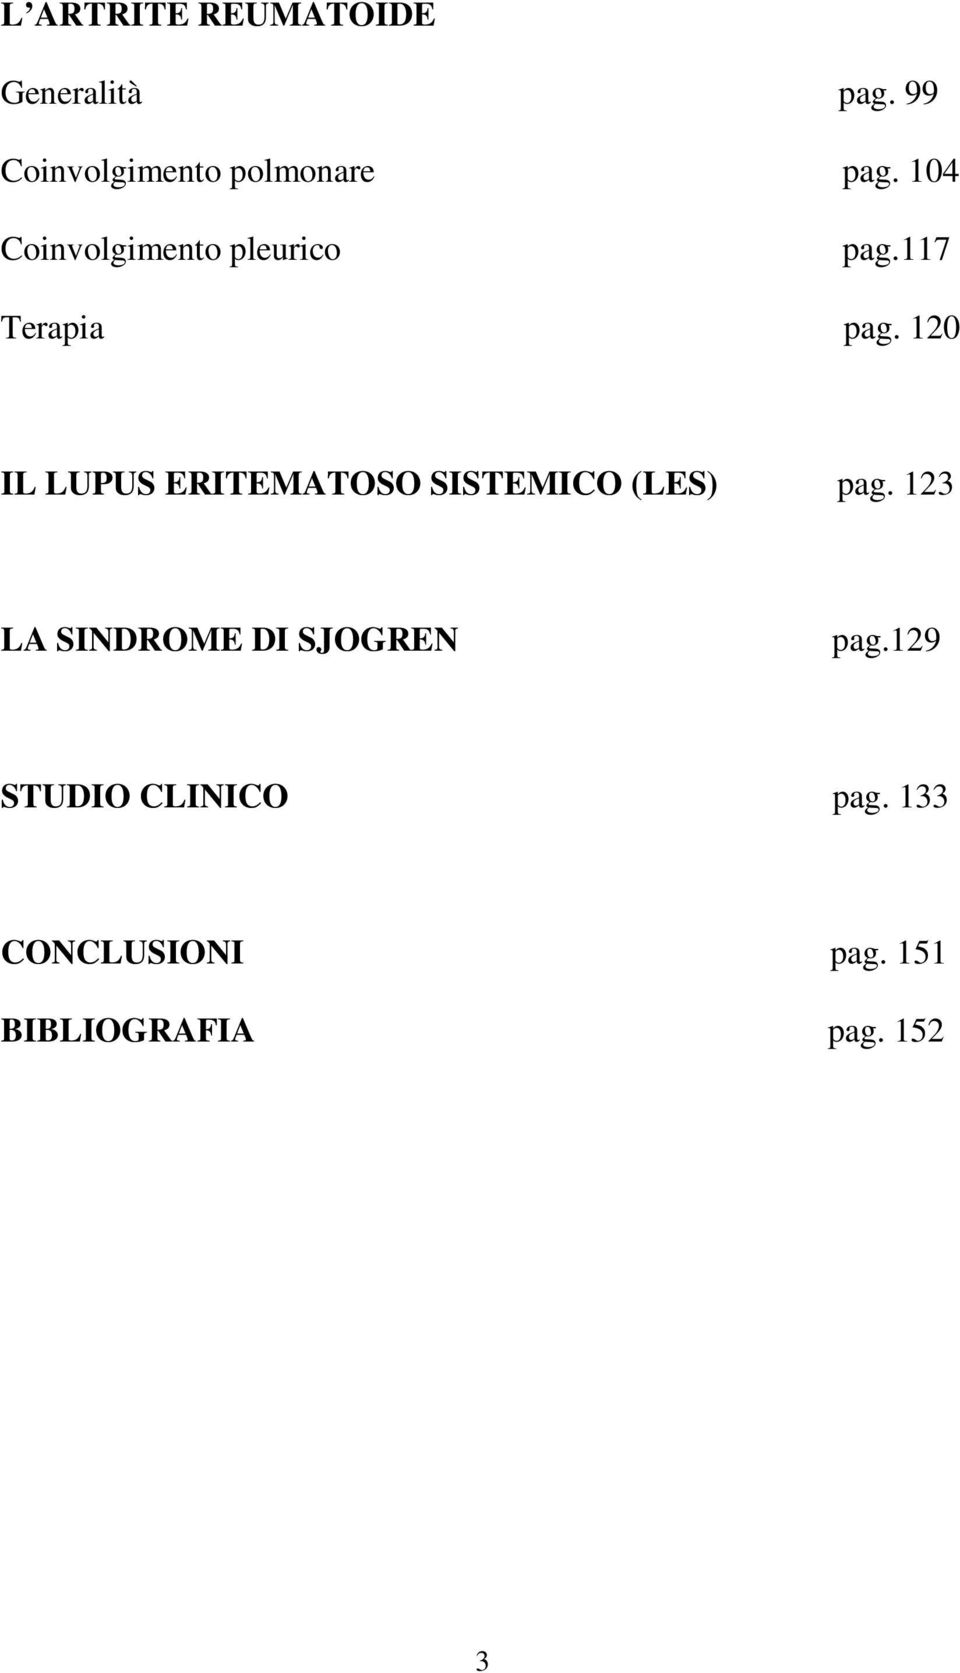 117 Terapia pag. 120 IL LUPUS ERITEMATOSO SISTEMICO (LES) pag.